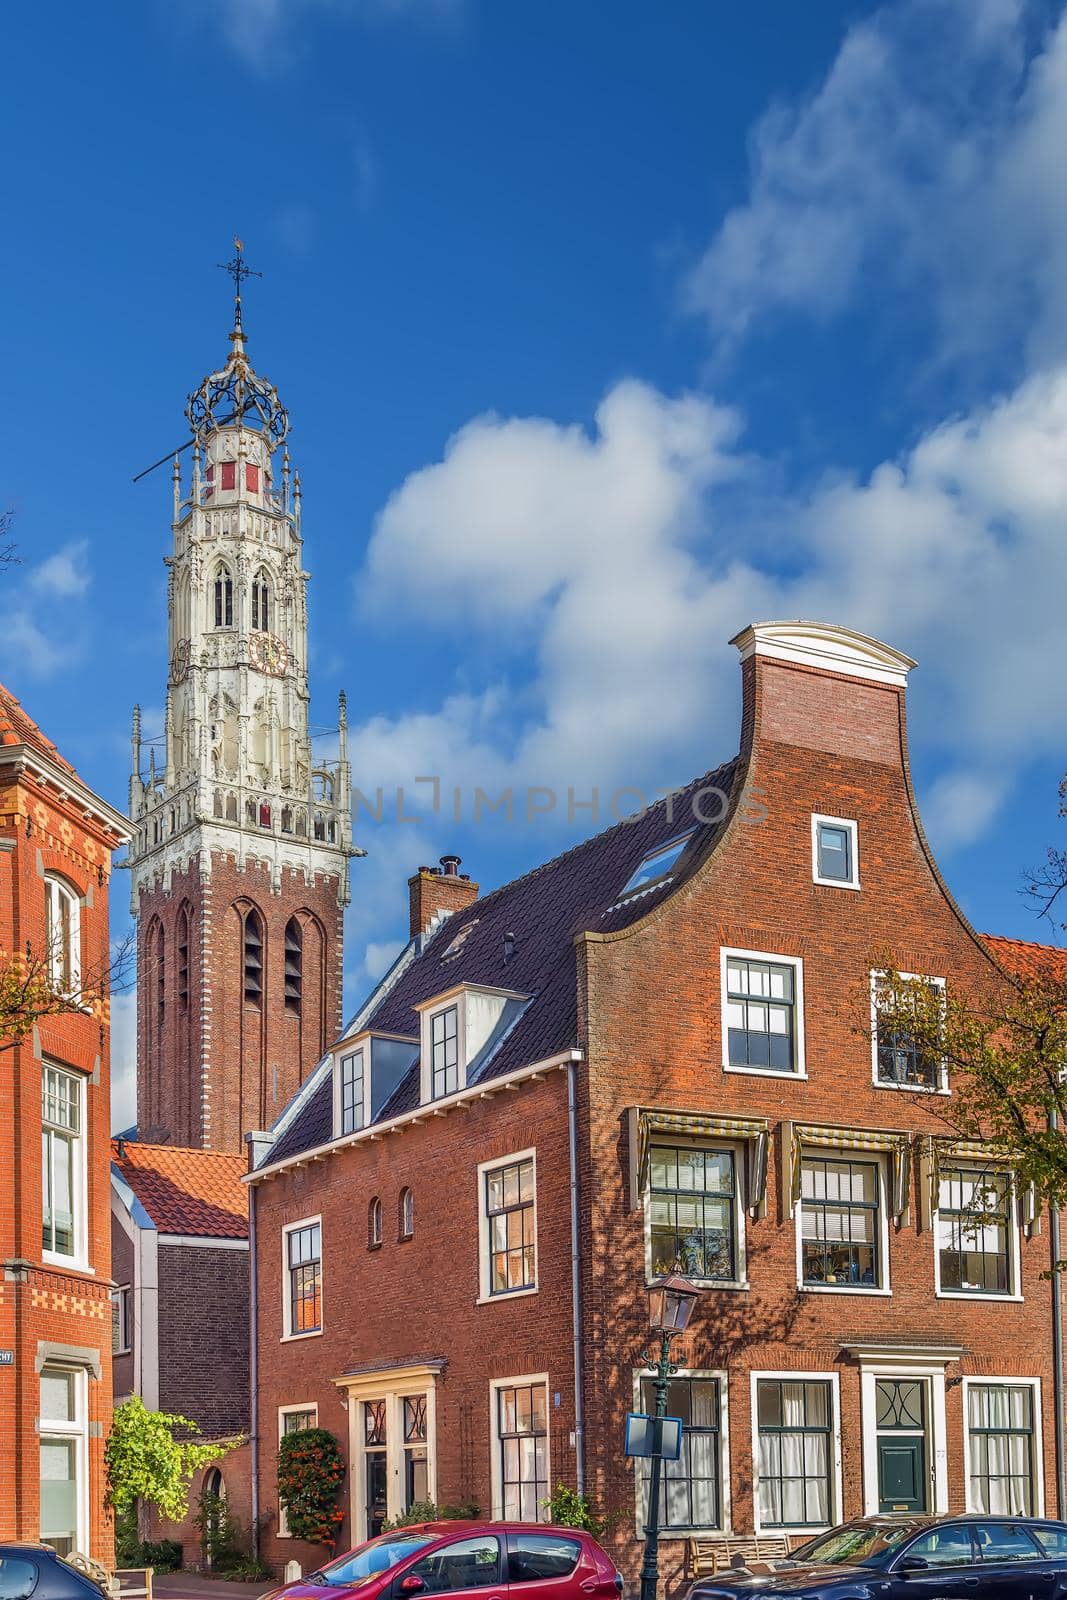 Tower of the Bakenesserkerk, Haarlem, Netherlands by borisb17